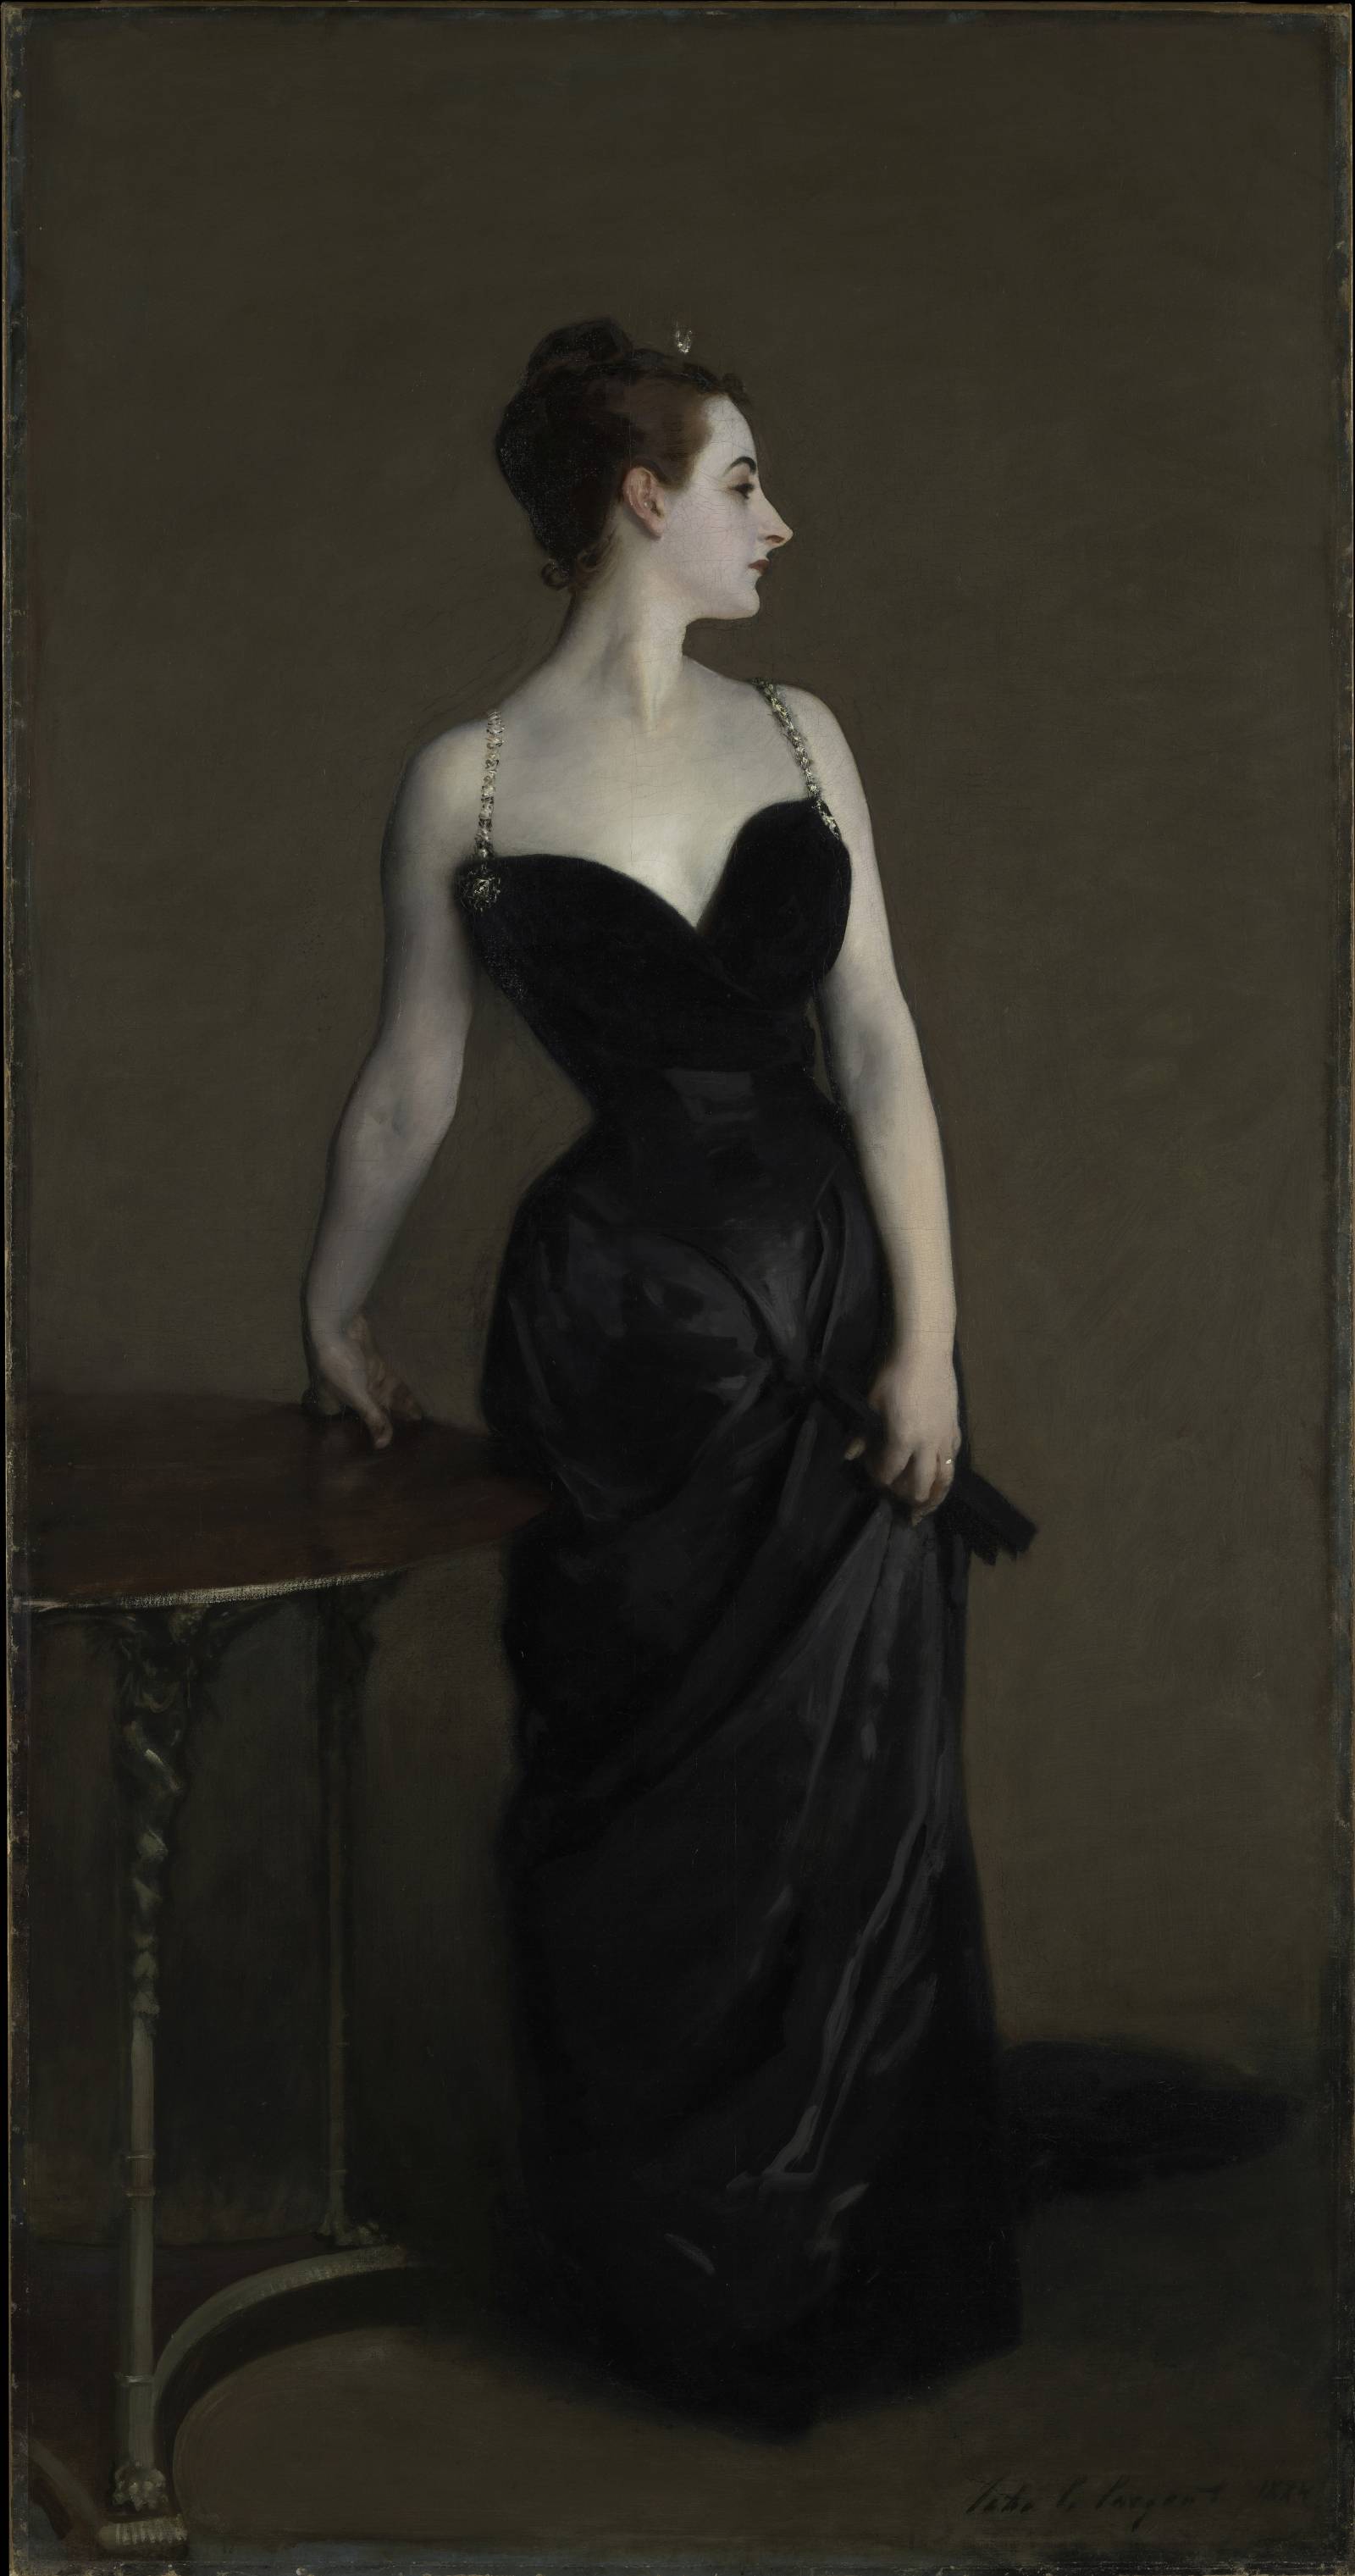 John Singer Sargent, Madame X, 1883-84. (The Metropolitan Museum of Art/Art Resource/Scala, Florence)